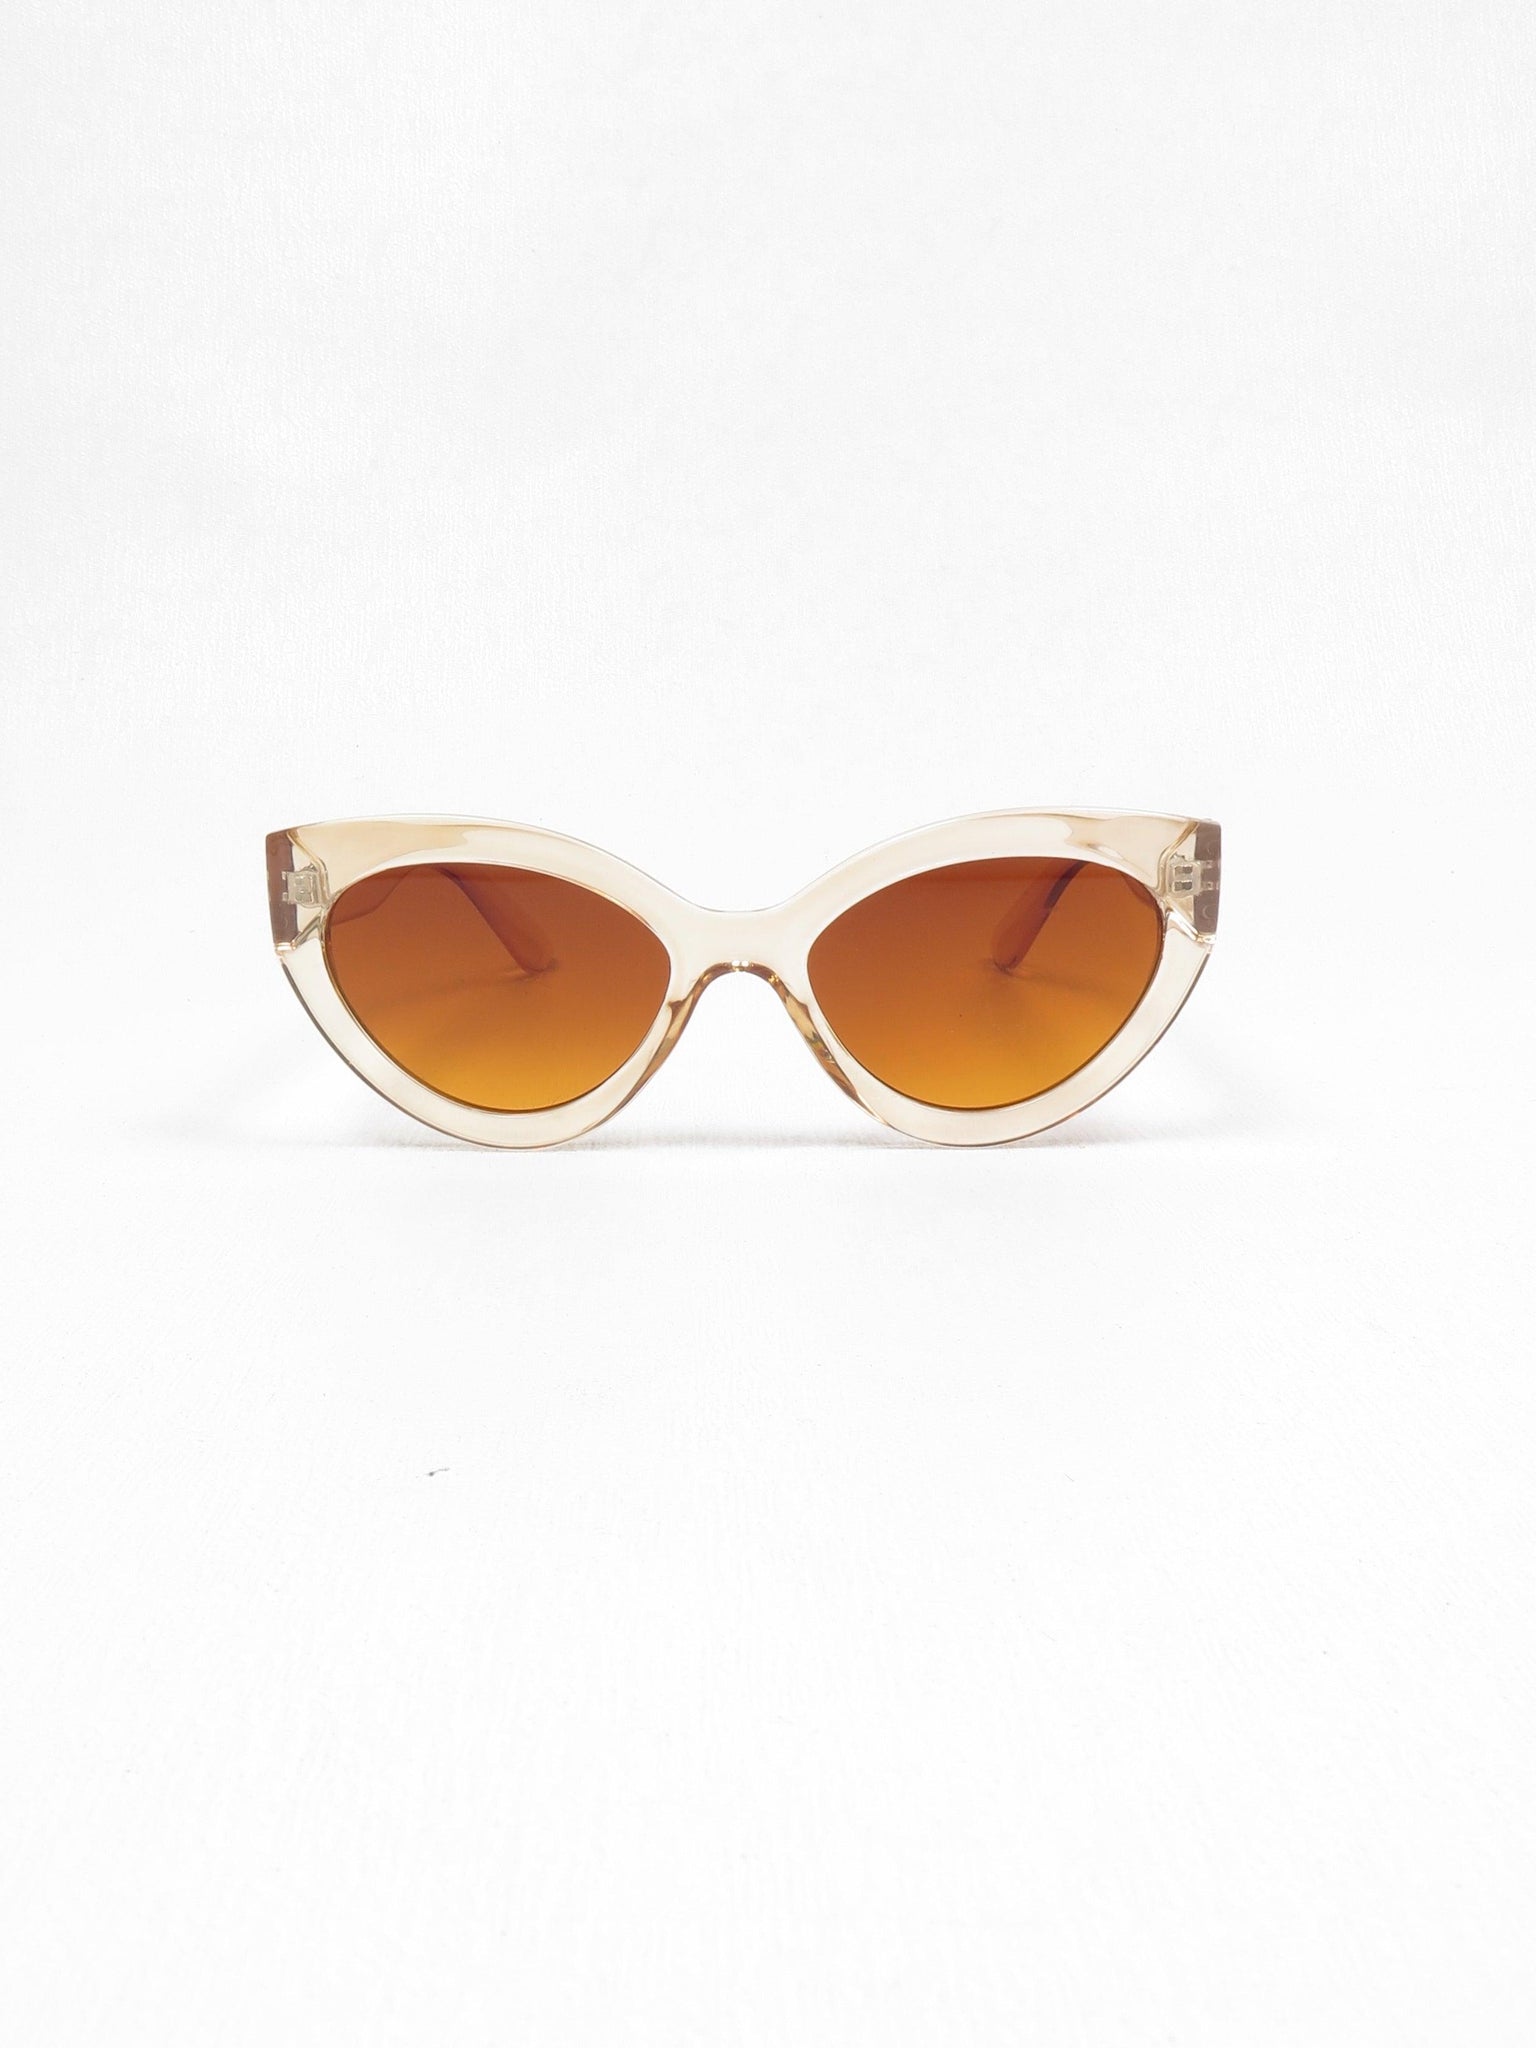 Edgy Cat Sunglasses - The Harlequin